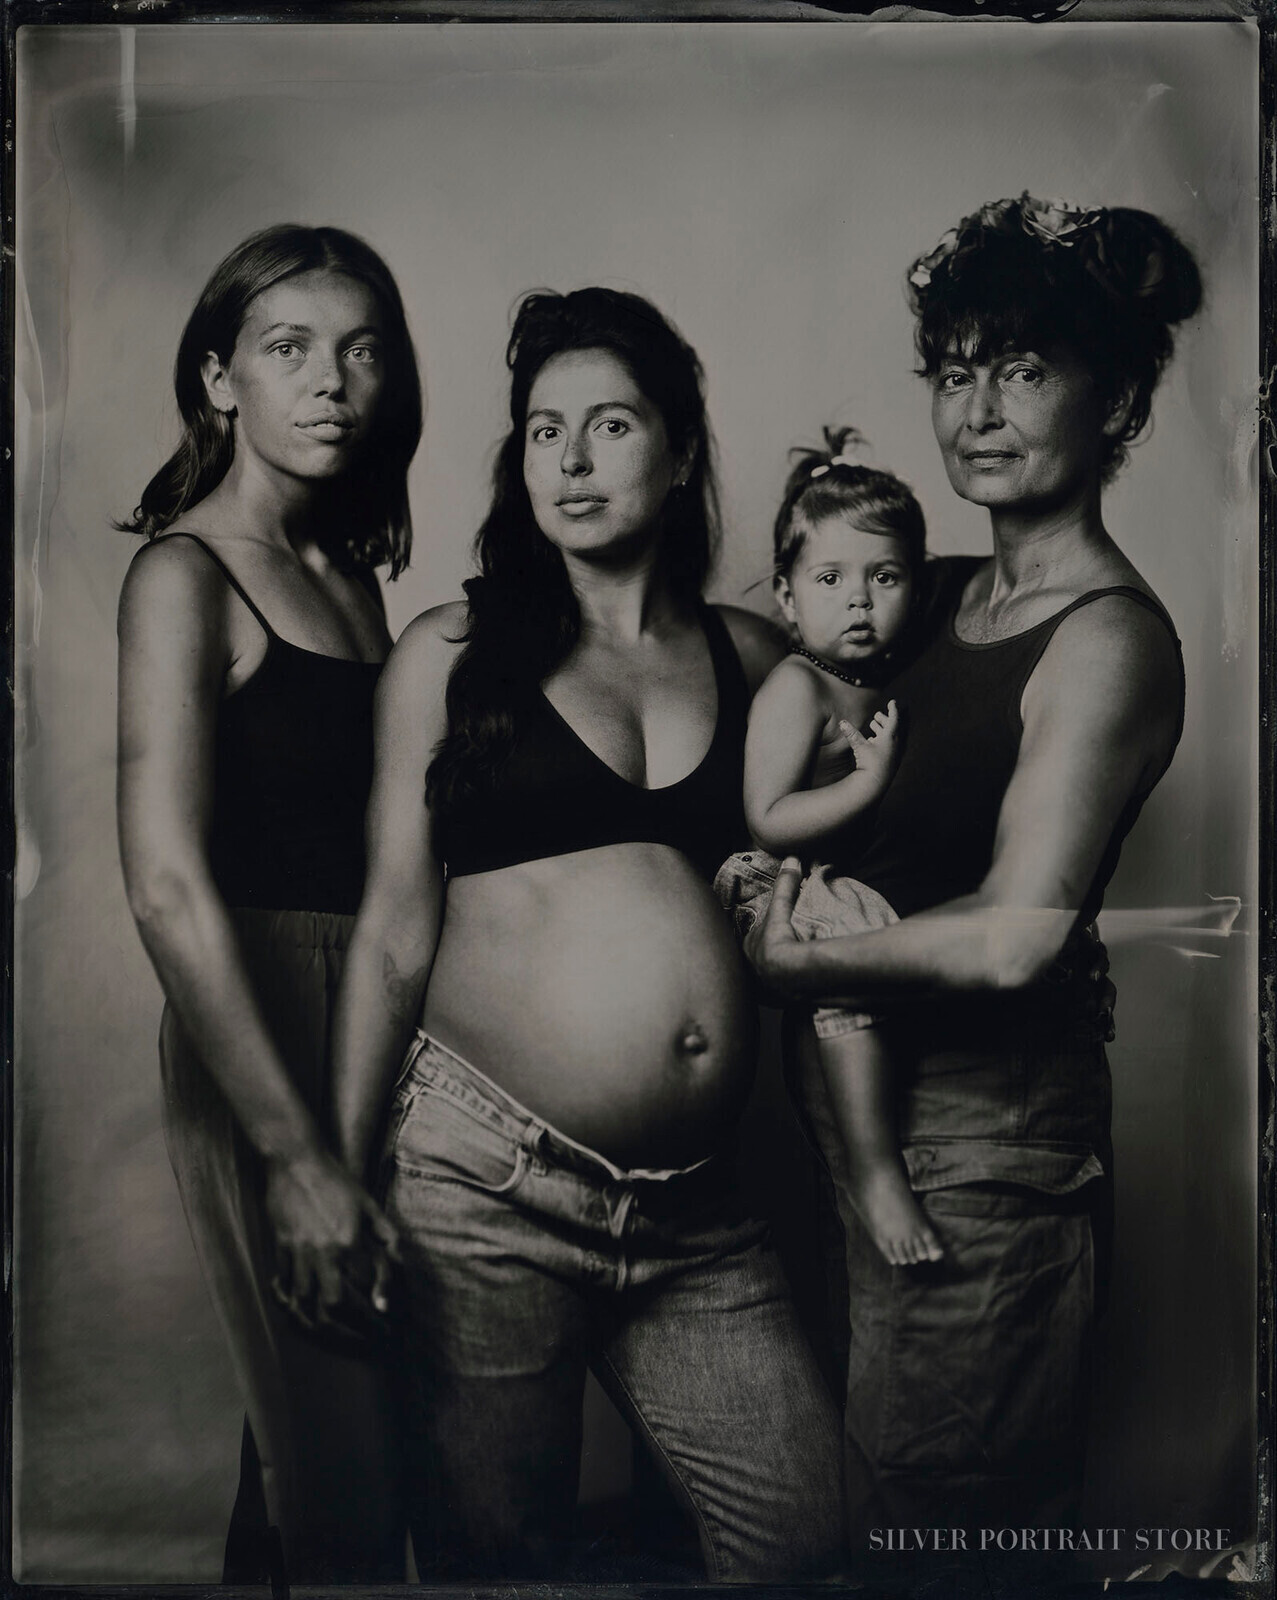 Engel, Lila,Toni & Tamara-Silver Portrait Store-Wet plate collodion-Black glass Ambrotype 20 x 25 cm.